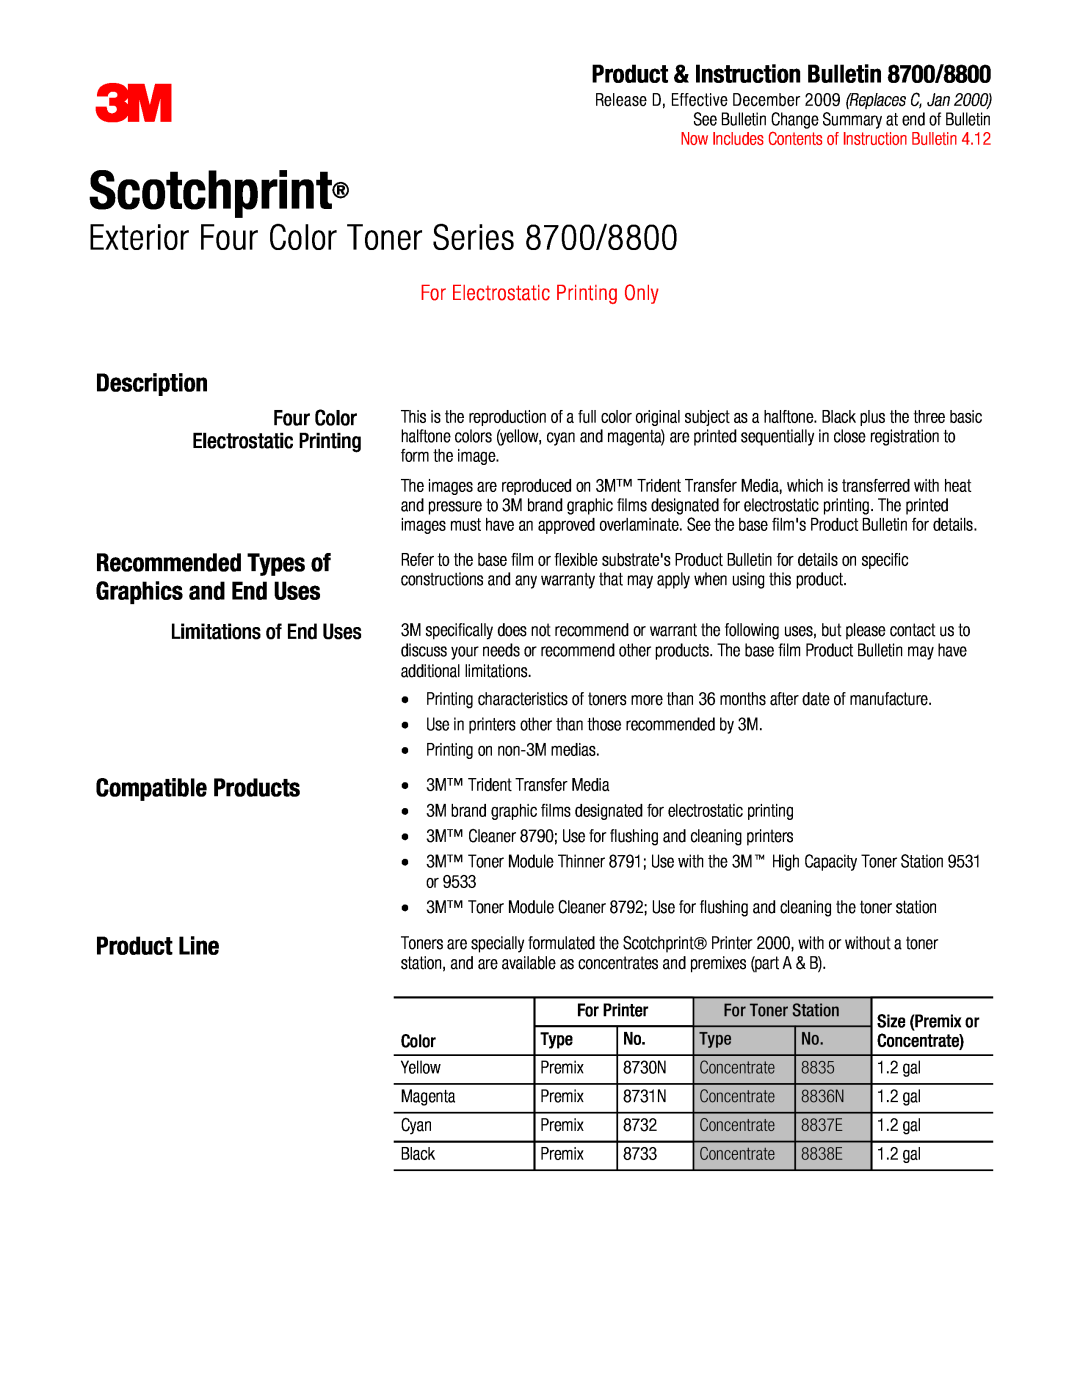 3M warranty Product & Instruction Bulletin 8700/8800, Description, Compatible Products Product Line, Scotchprint 